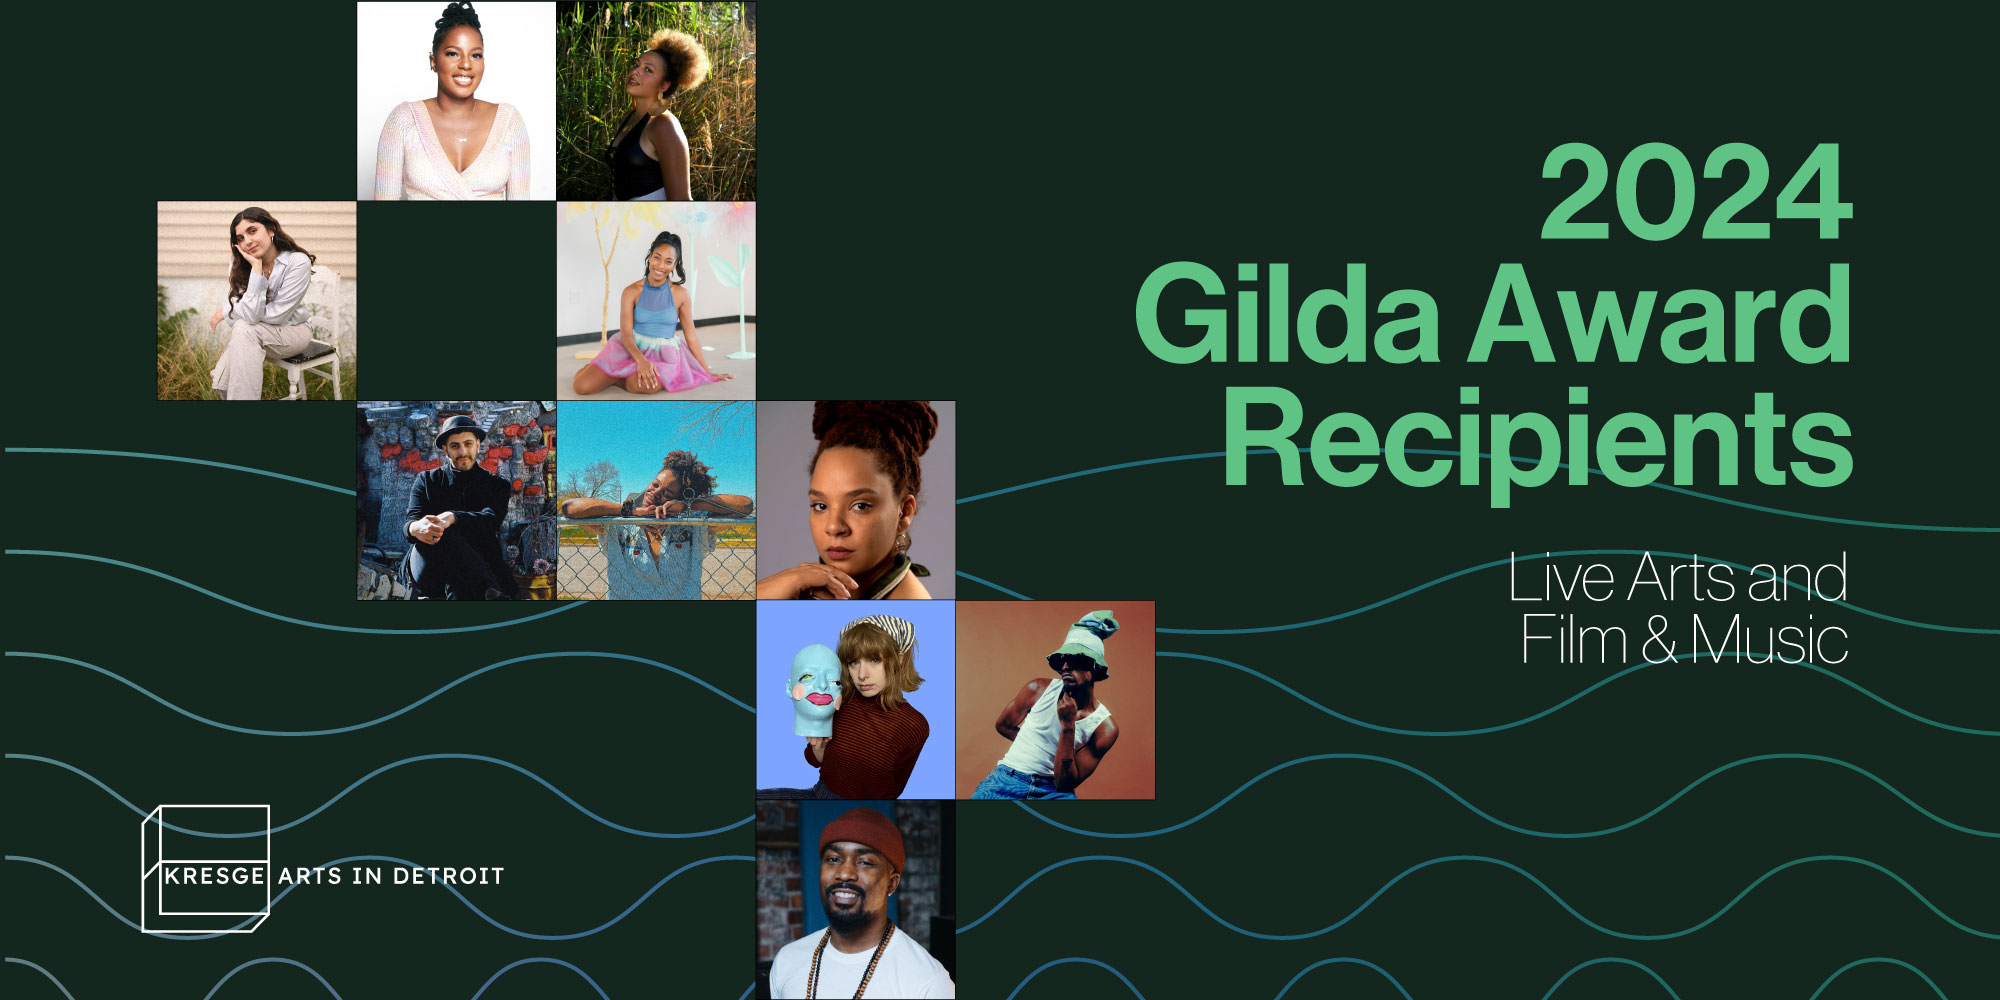 Graphic containing headshots of 2024 Gilda Award recipients